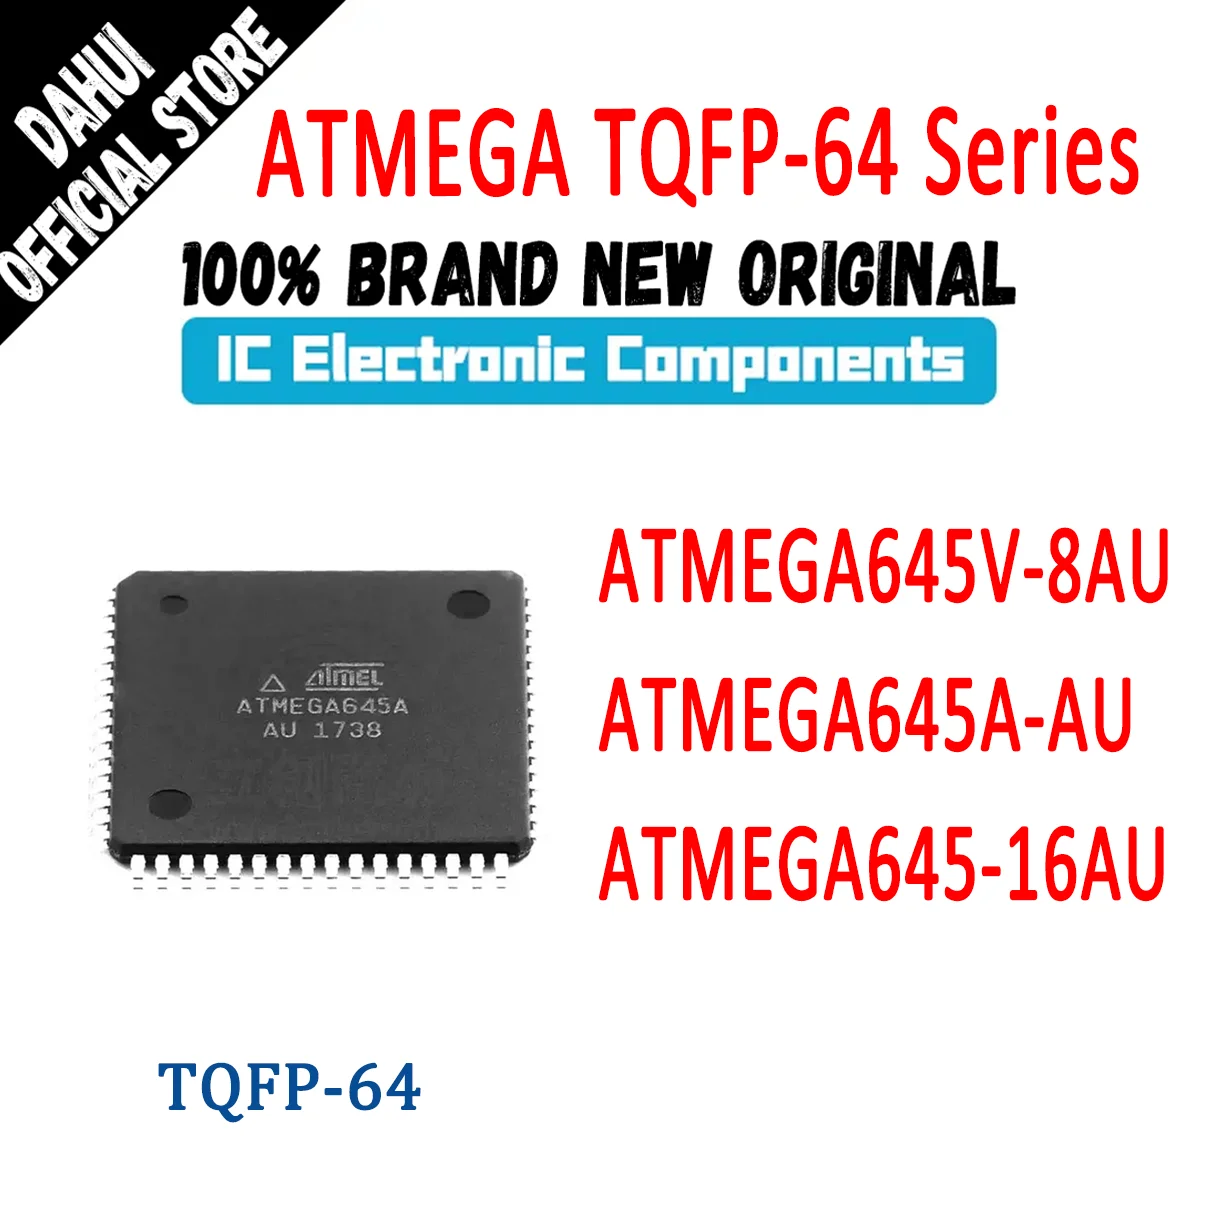 

ATMEGA645A-AU ATMEGA645V-8AU ATMEGA645-16AU ATMEGA645A ATMEGA645V ATMEGA645 ATMEGA IC MCU Chip TQFP-64 In Stock 100% New Originl